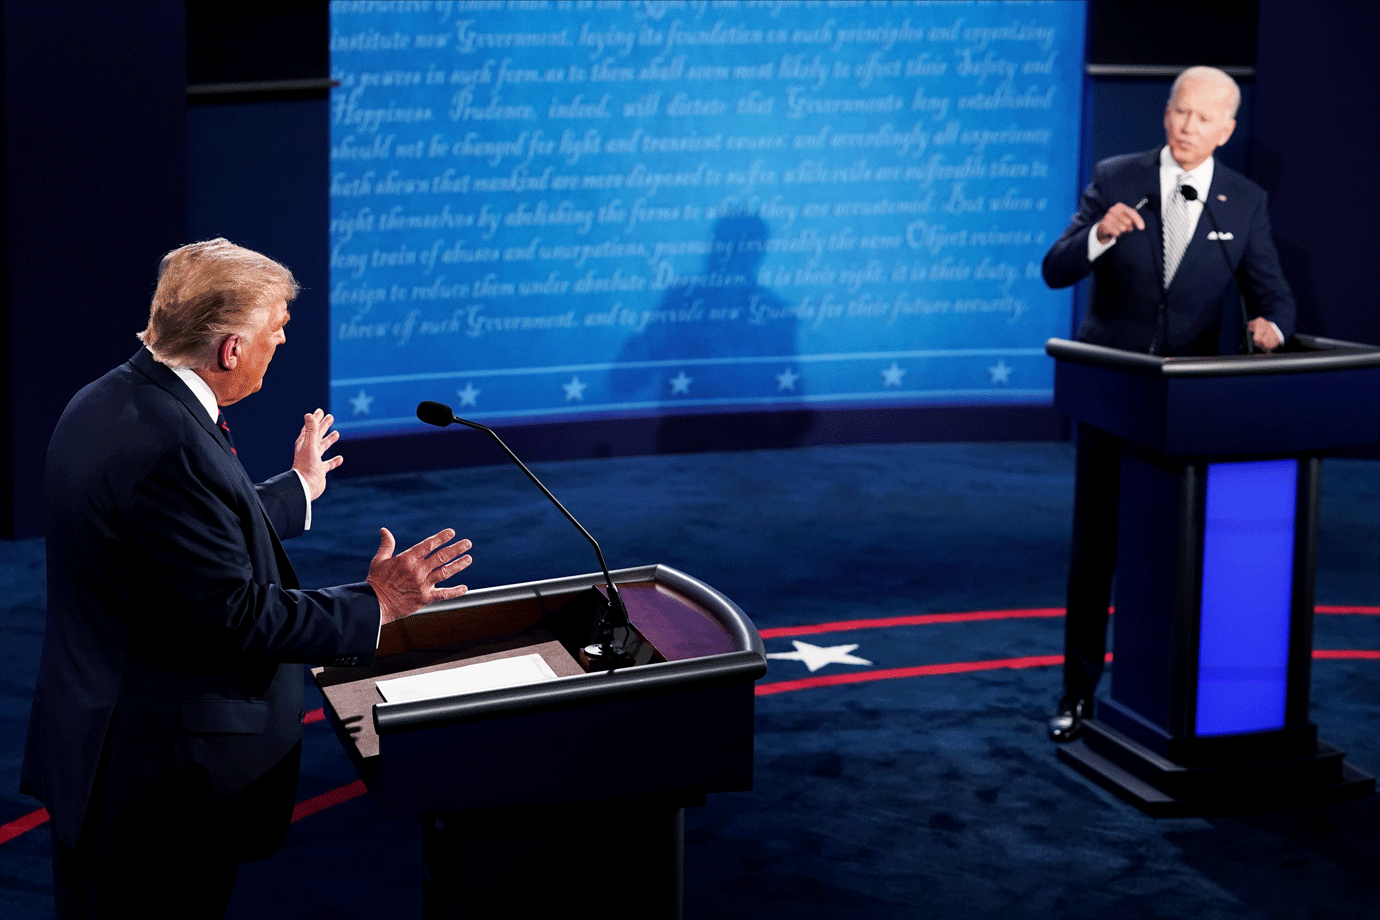 Eleições nos EUA: caos marca primeiro debate entre Trump e Biden